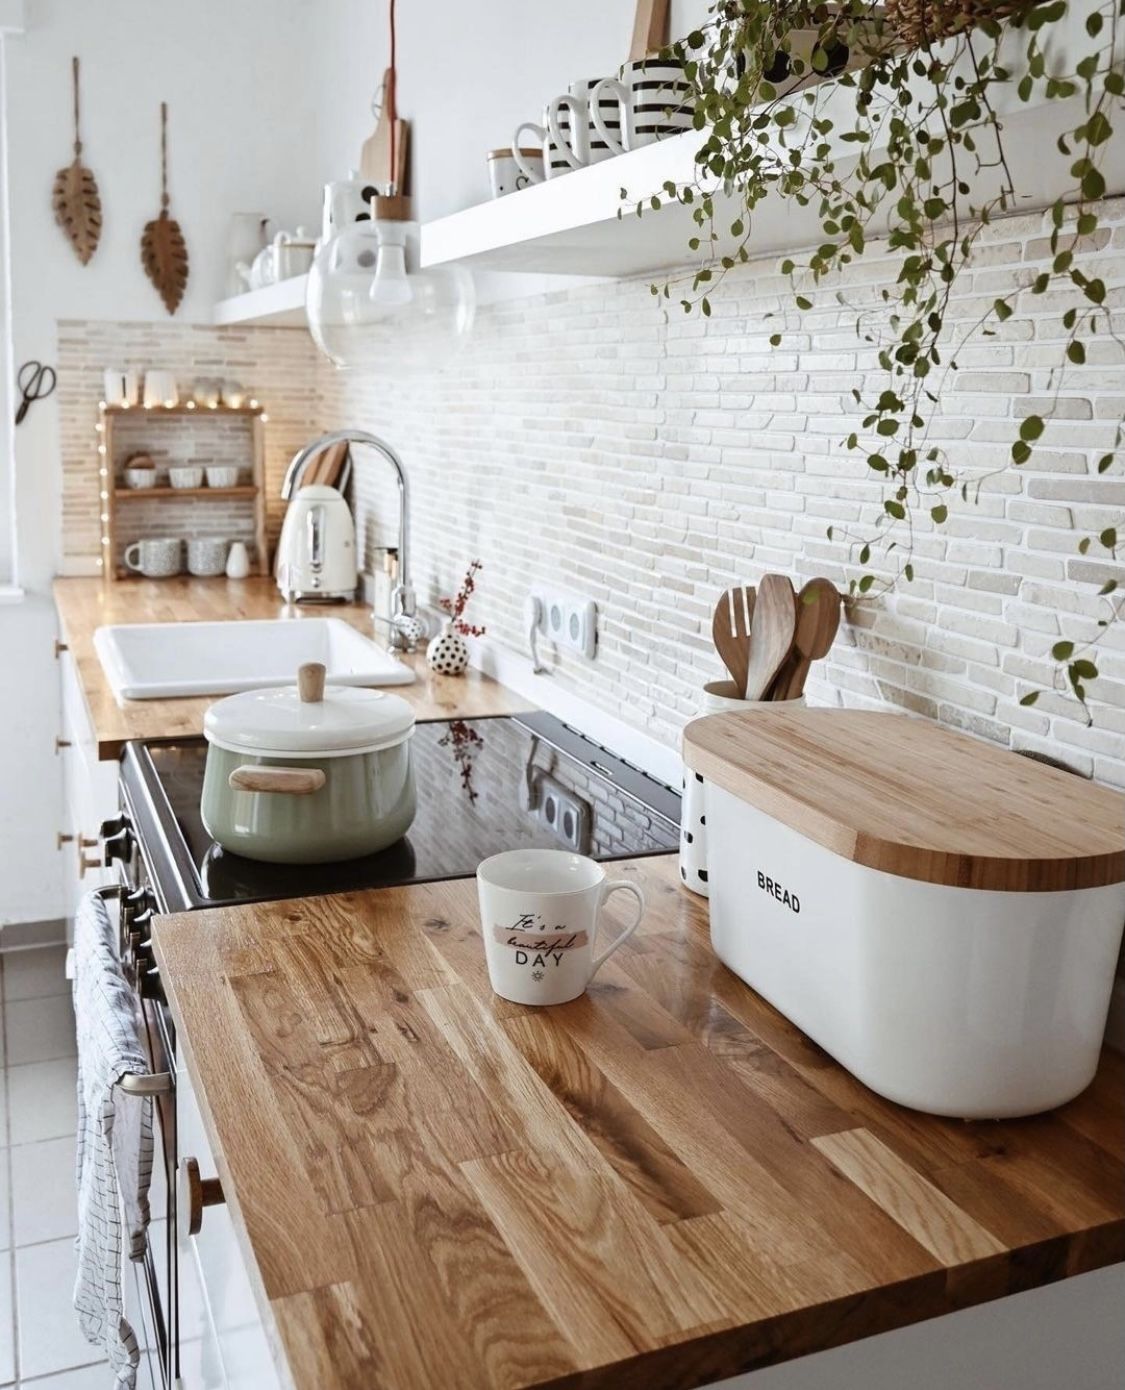 Minimalist Kitchen with Wooden Countertops